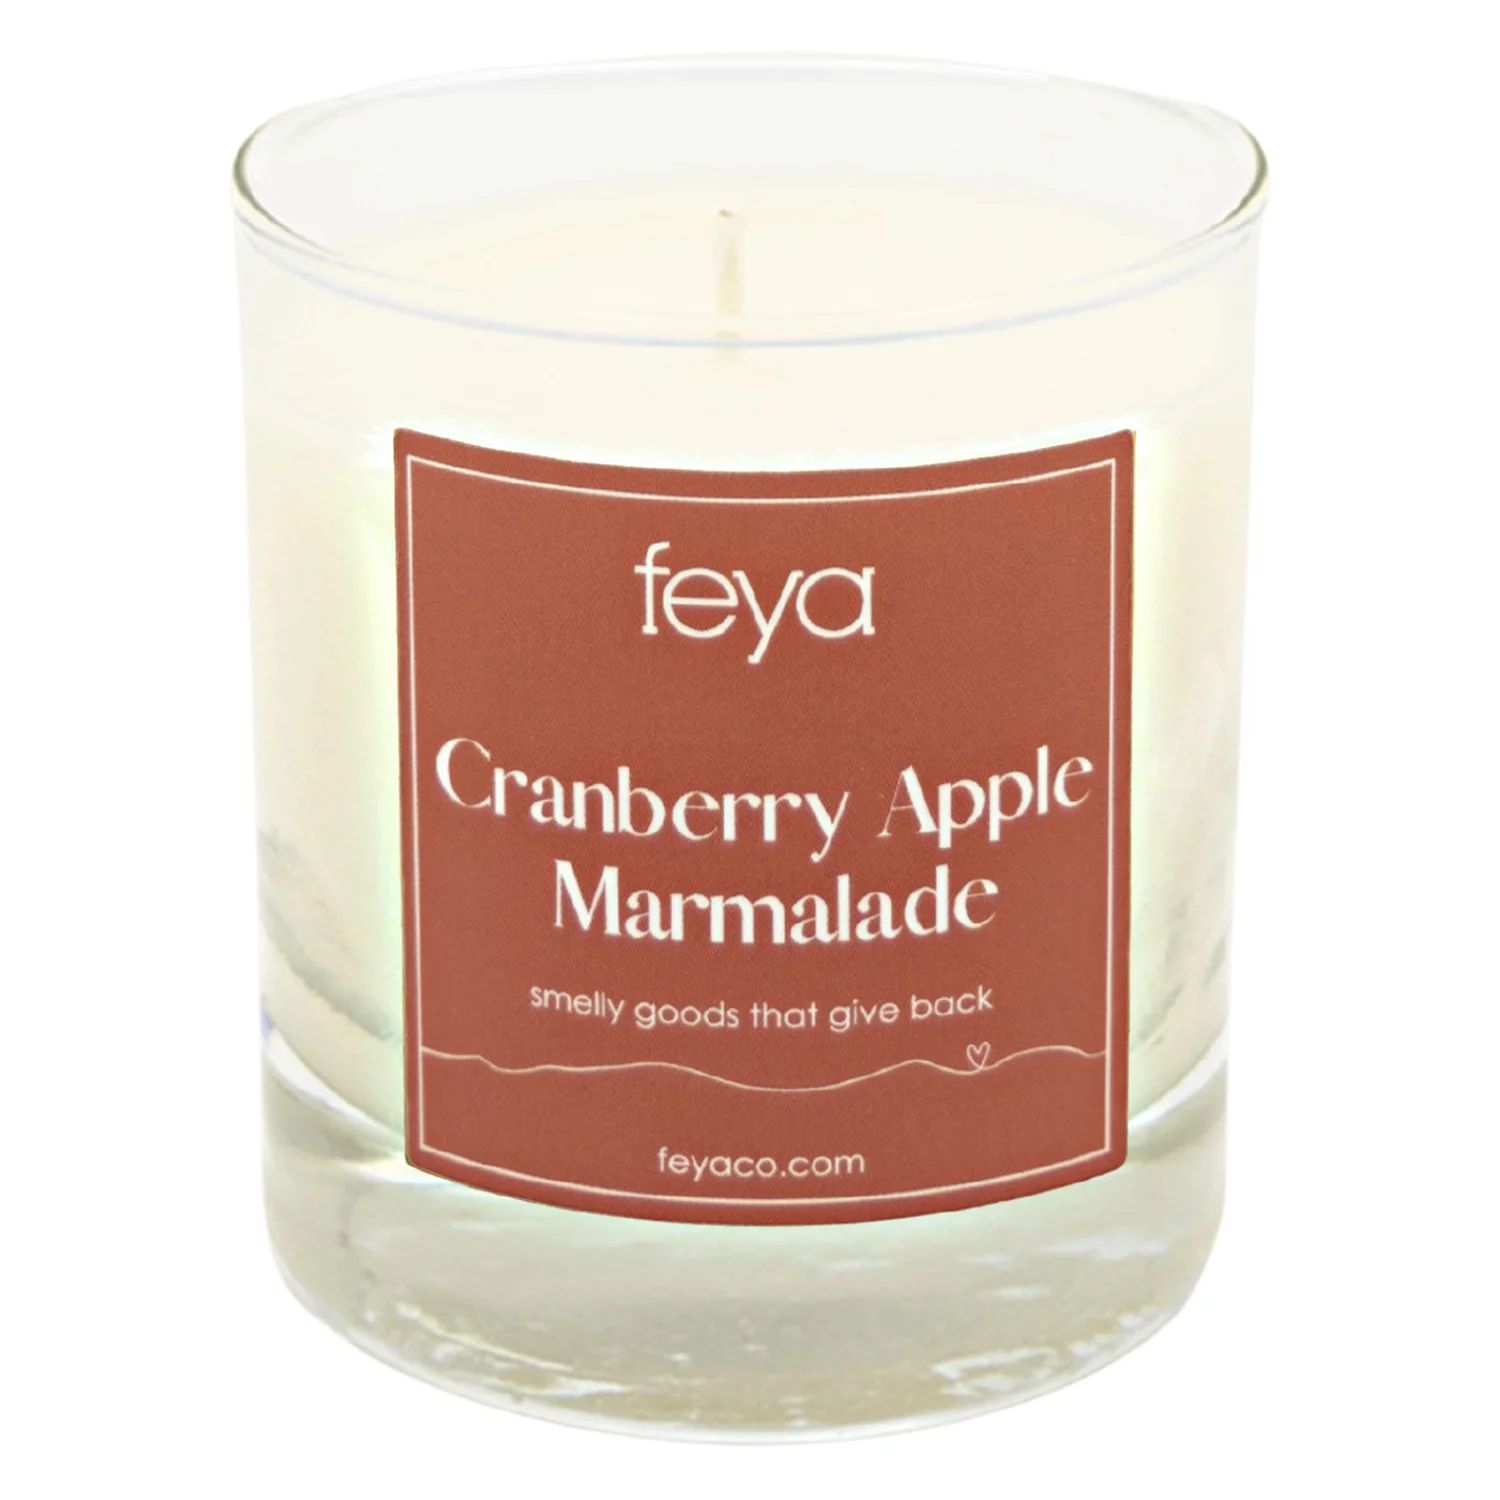 Feya Candle Клюквенно-яблочный мармелад, 6,5 унций. Соевая свеча приправа для тыквы feya candle 6 5 унций соевая свеча